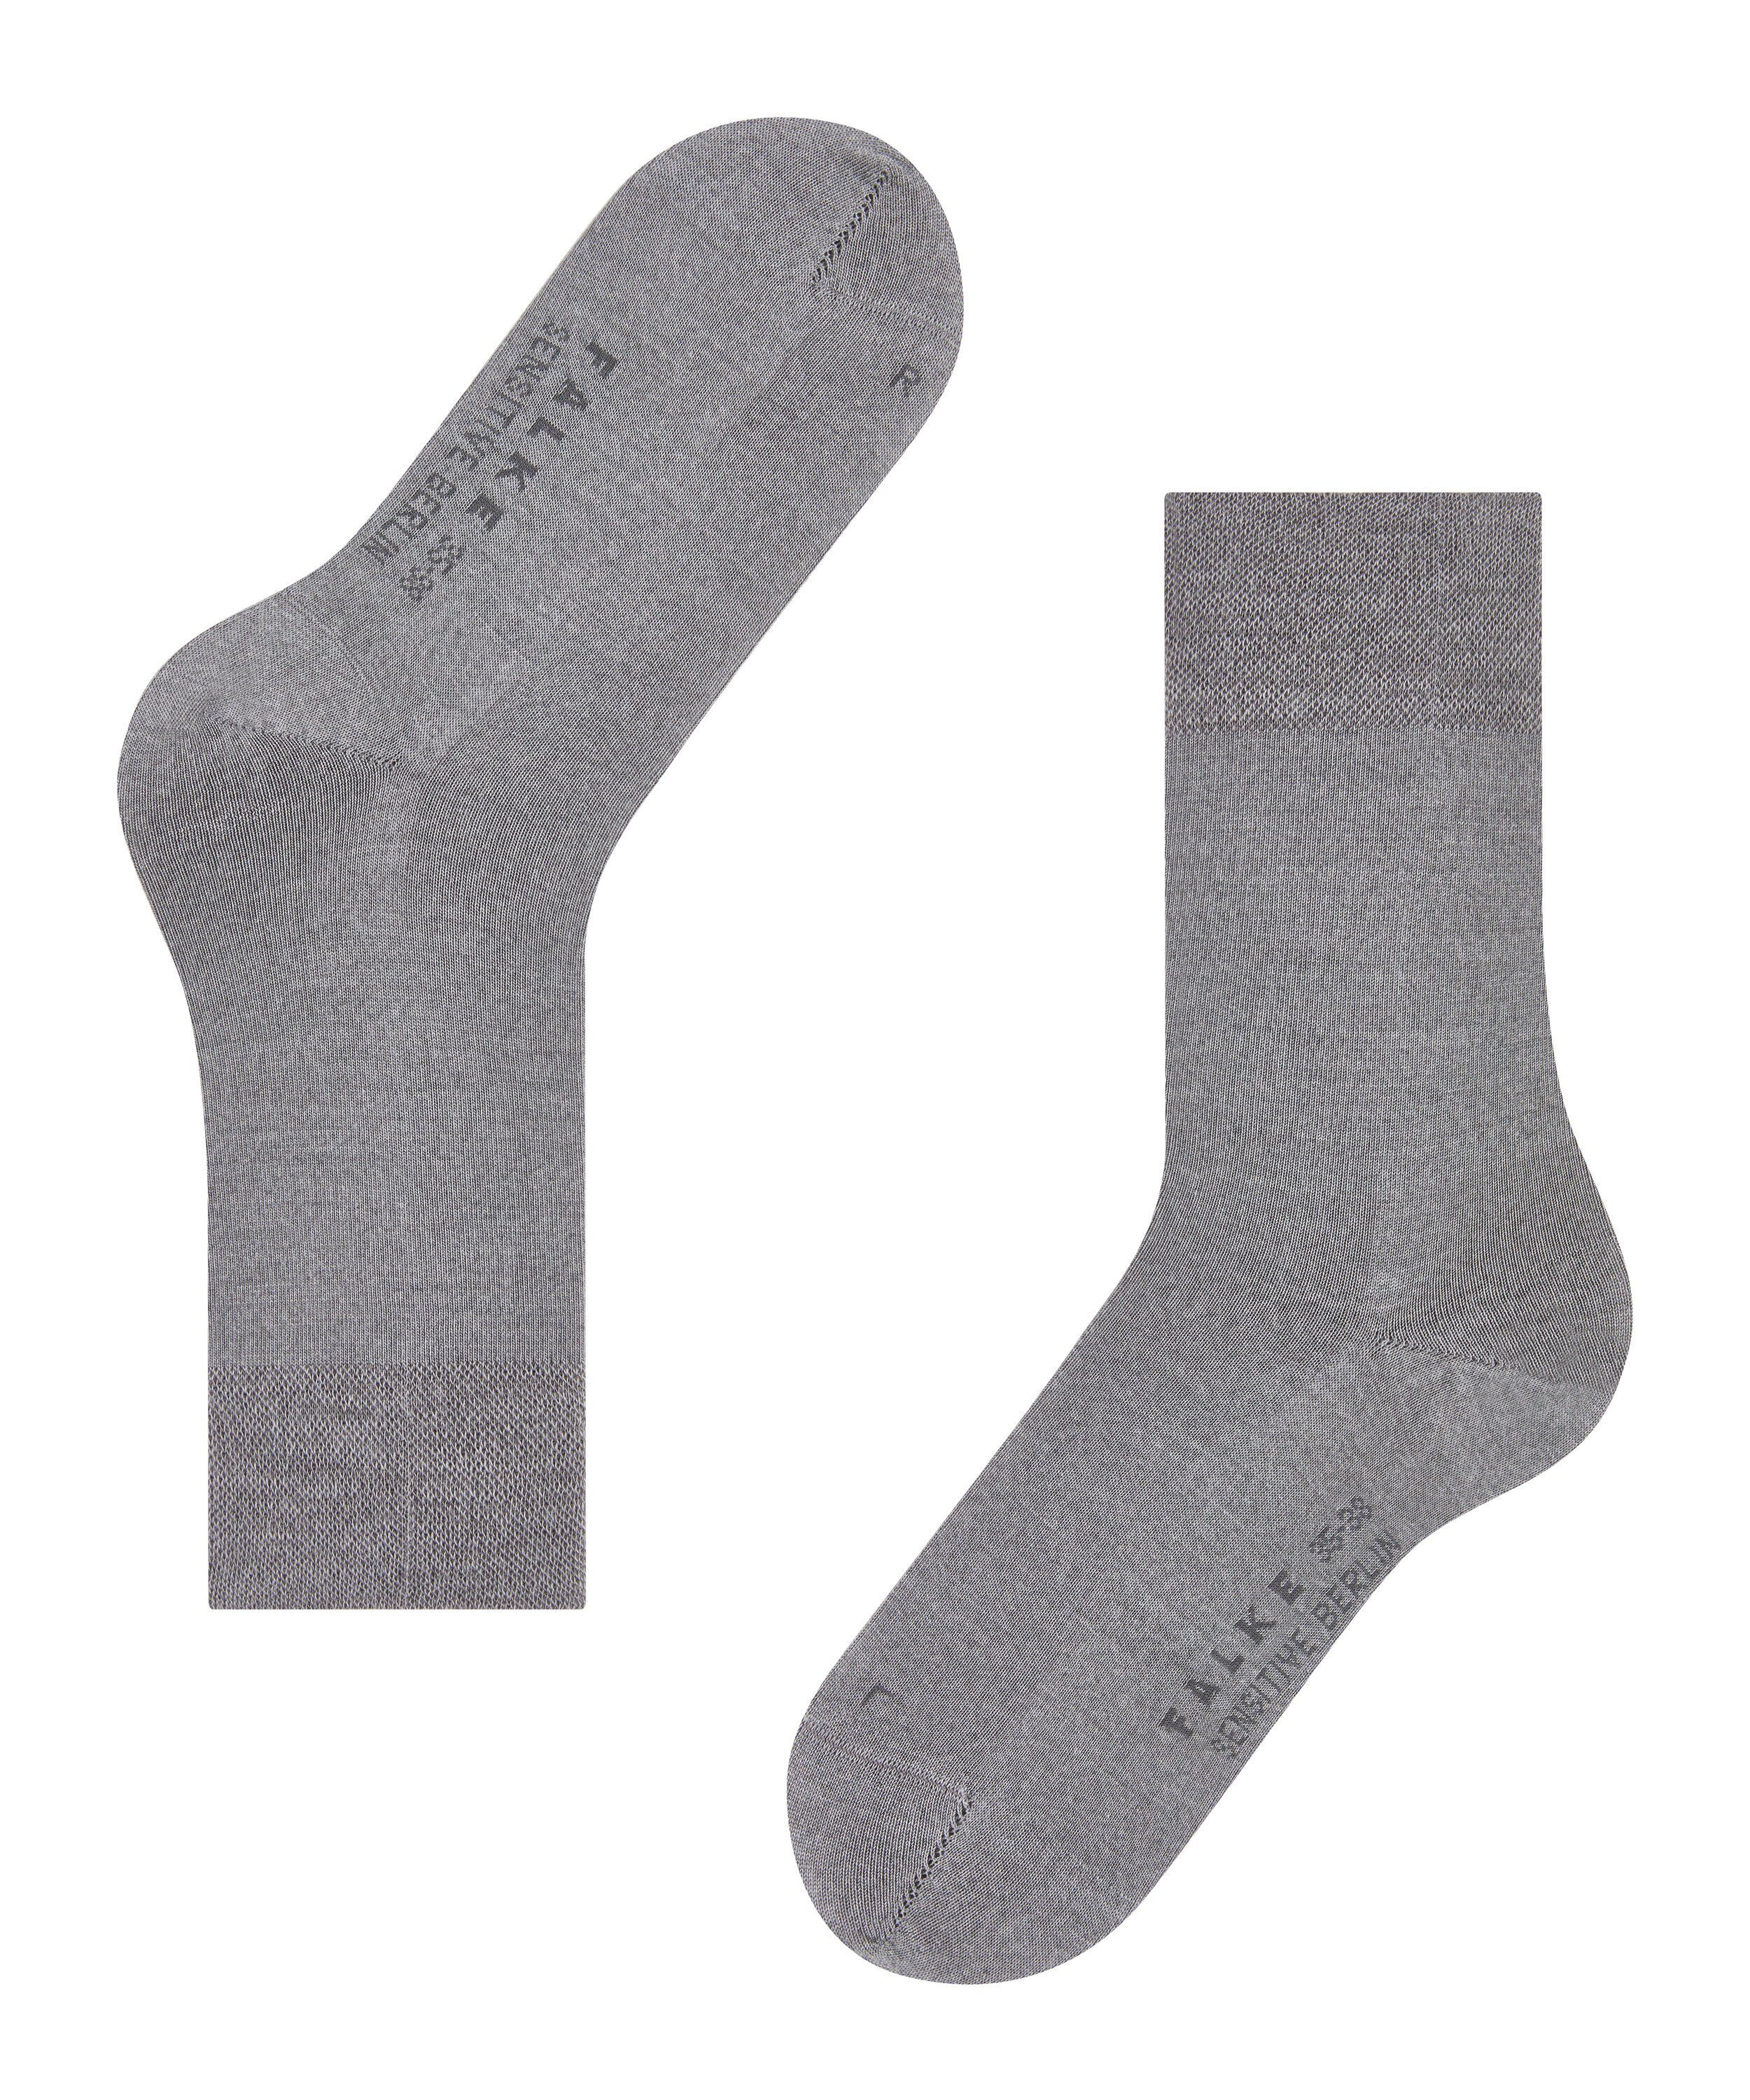 (1-Paar) Sensitive mel. Berlin FALKE (3830) grey light Socken